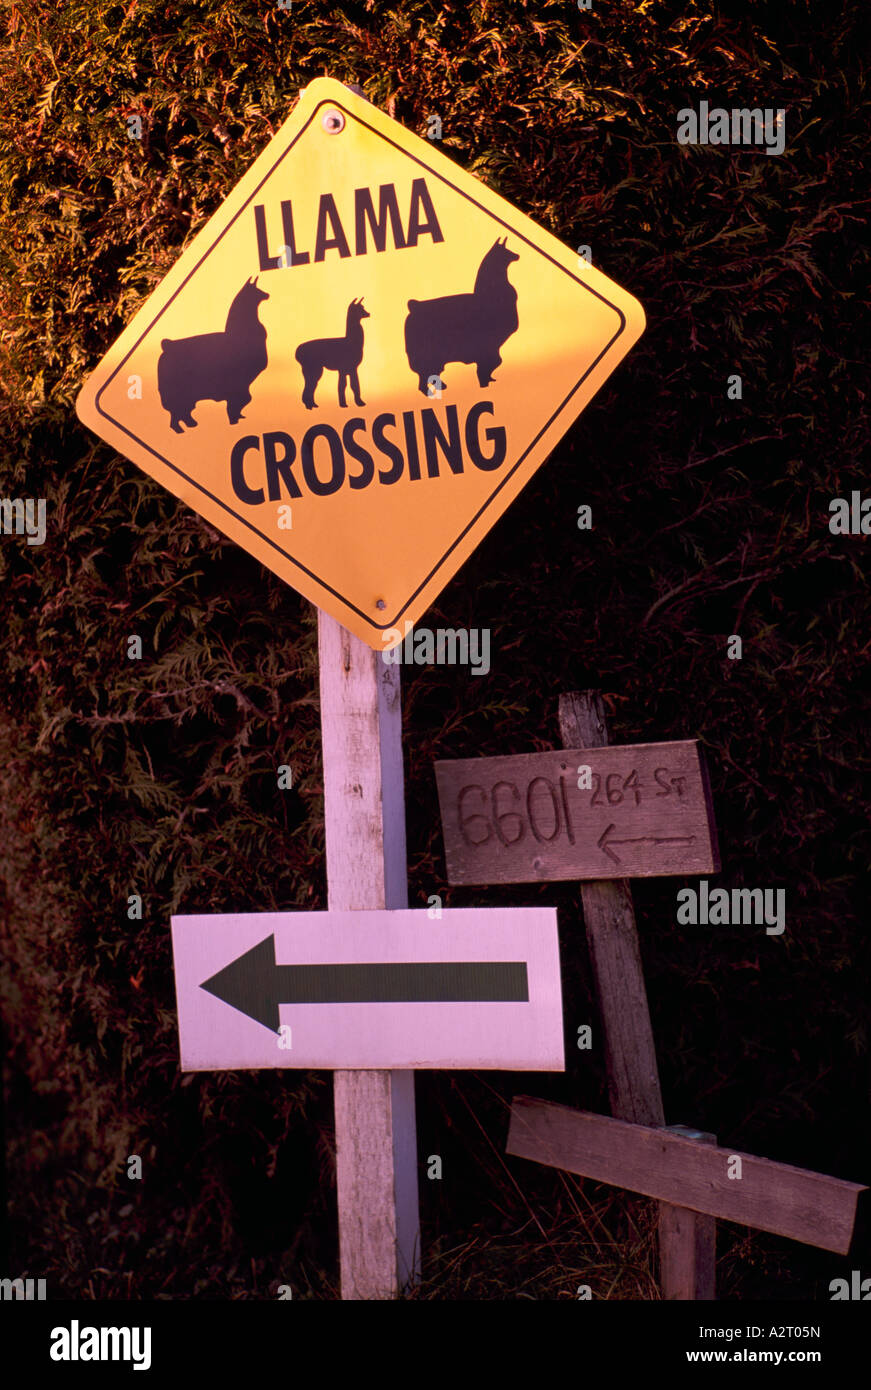 Road Sign, Caution Signs - Animal Crossing, Llama Animals Stock Photo